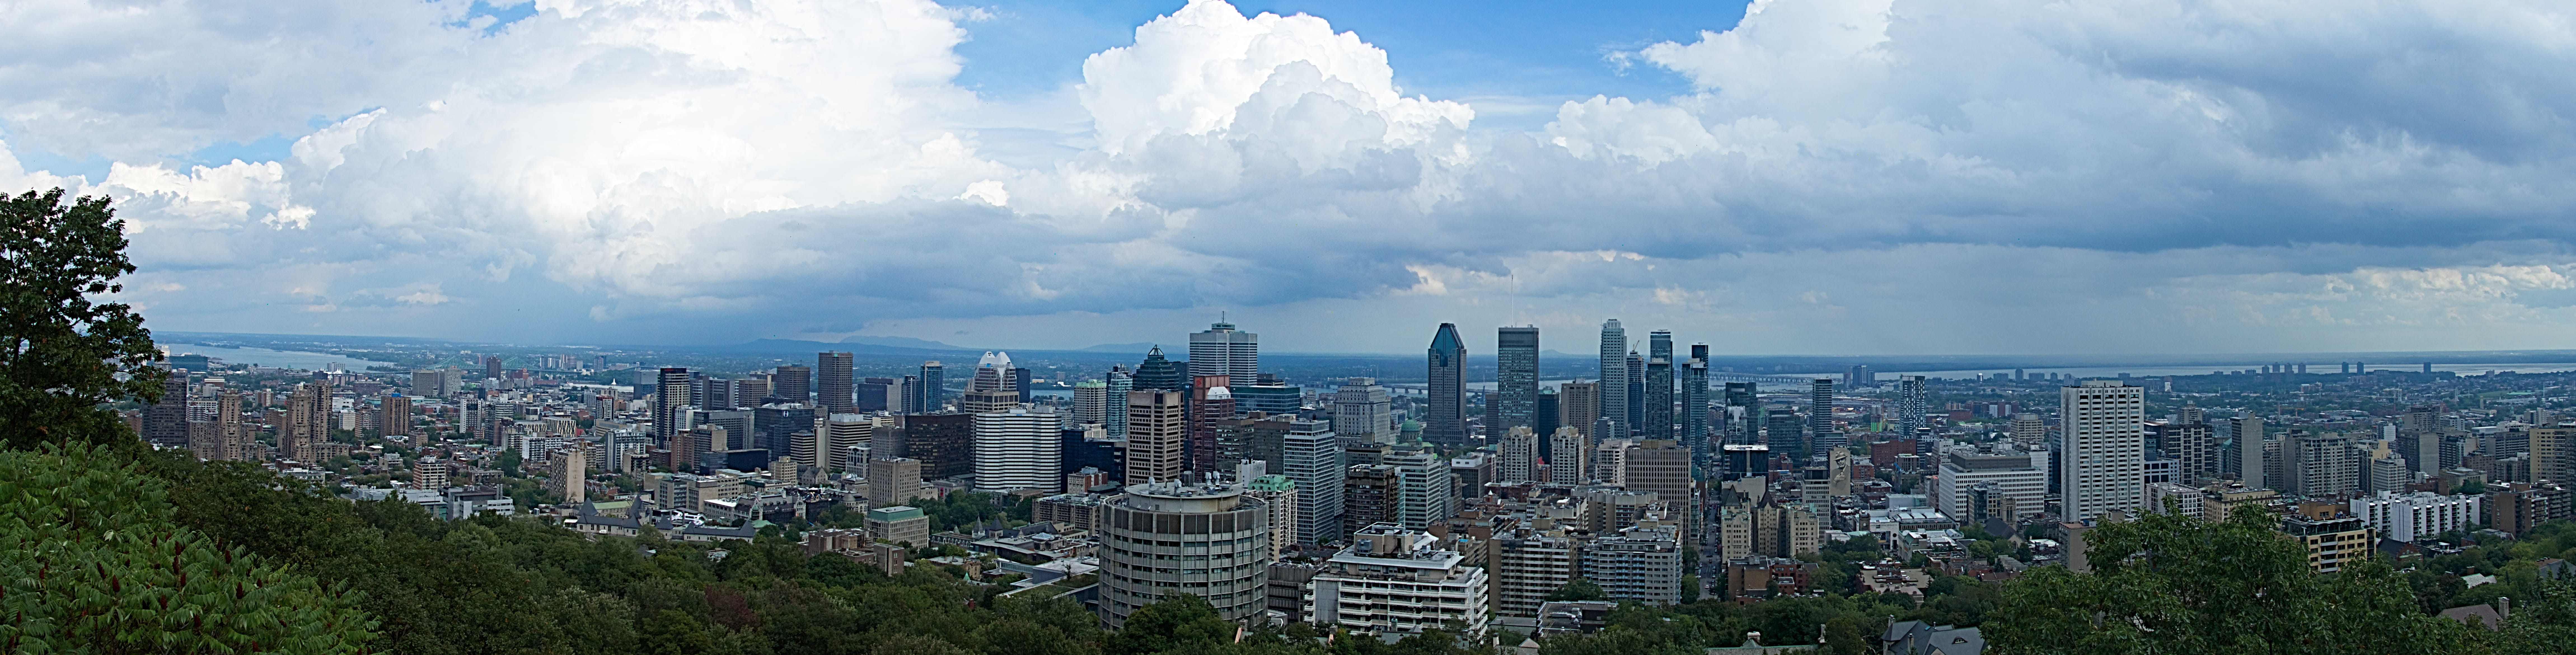 canada, montréal, mount royal chalet, panorama, skyline, city